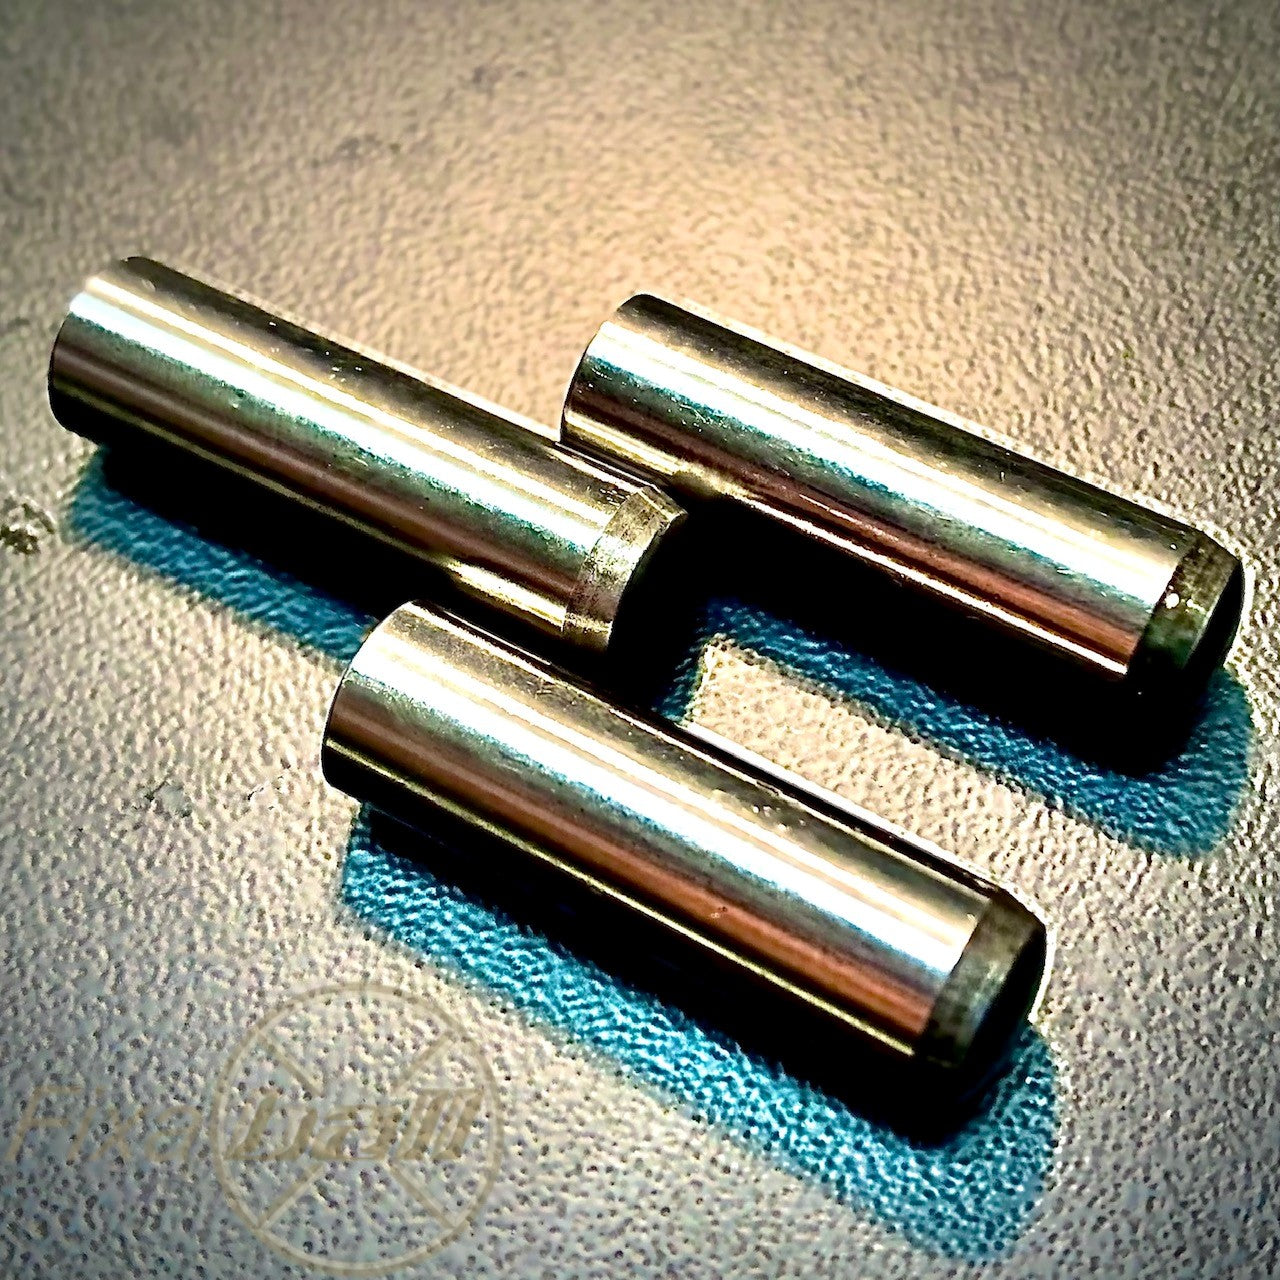 12mm Dowel Pins Hardened & Ground, Steel, DIN 6325 Dowel Pins 12mm Dowel Pins Hardened & Ground, Steel, DIN 6325 Dowel Pins – Harden and Ground